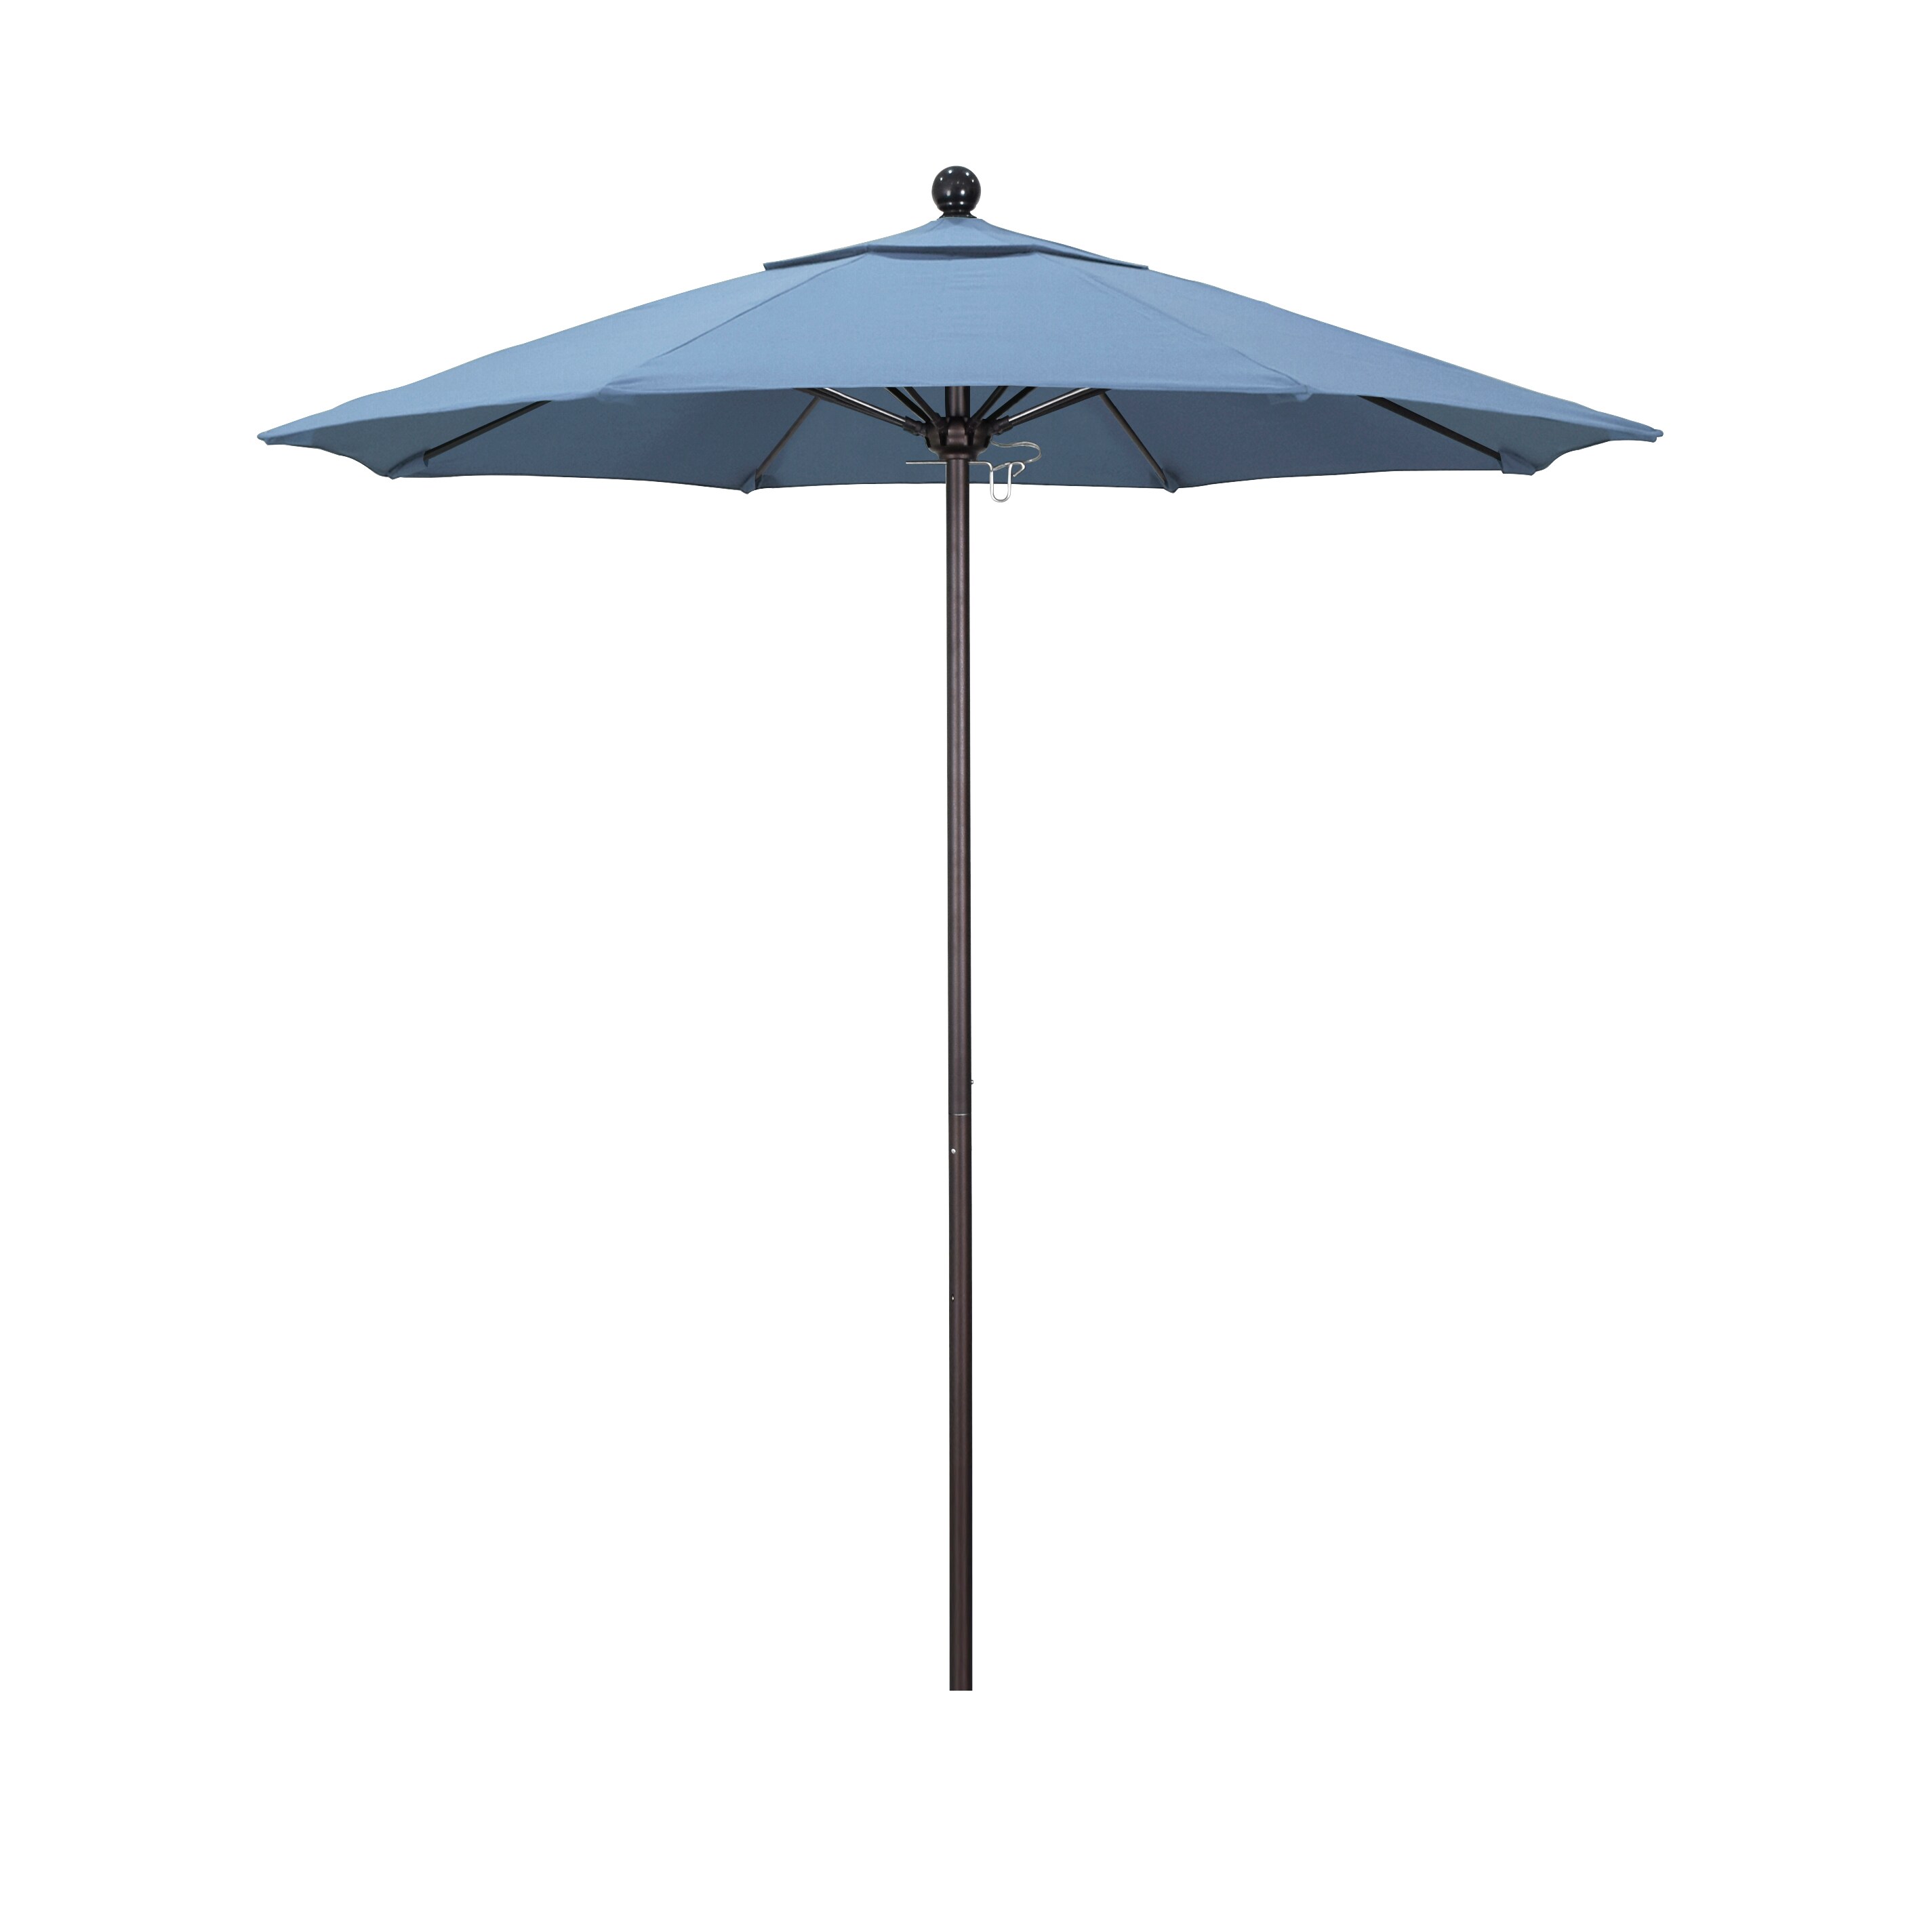 Olefin Woven Granite California Umbrella 11 Round Aluminum/Fiberglass Umbrella Pulley Lift Bronze Pole 